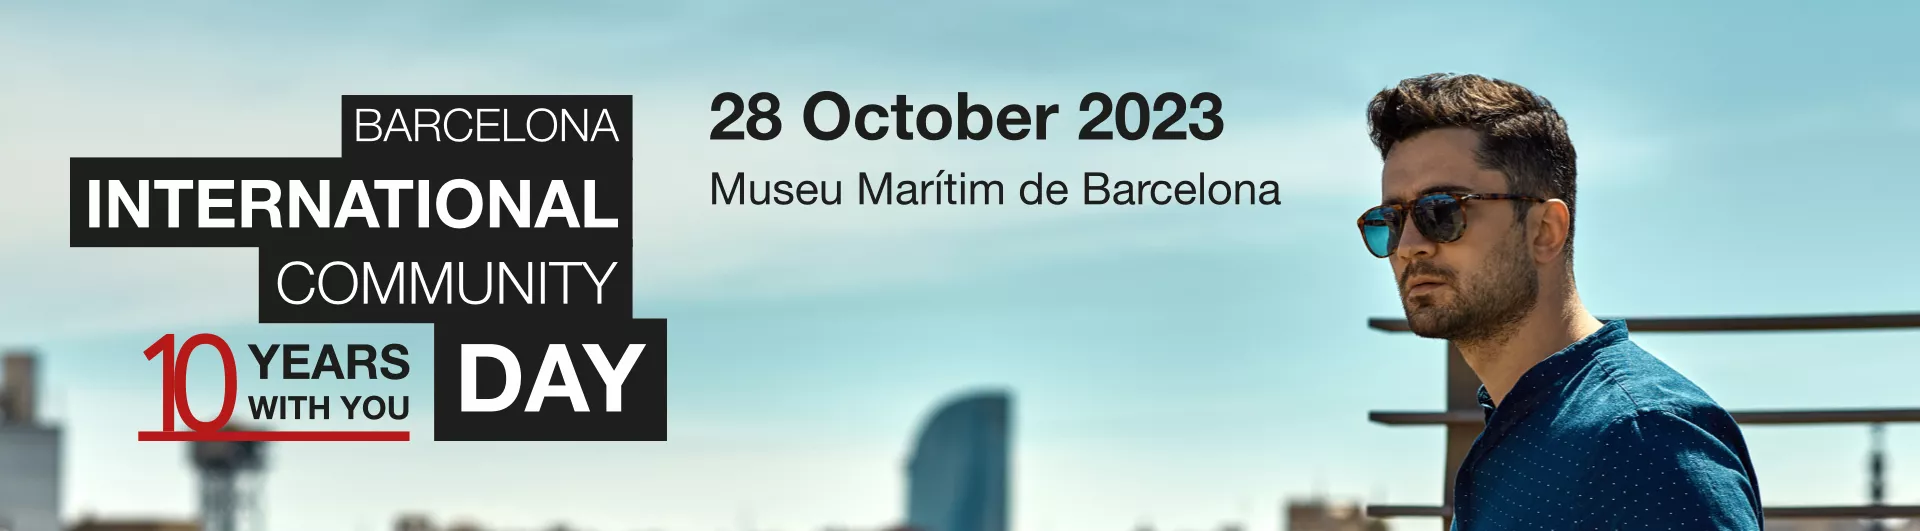 Barcelona International Community Day. 28 October 2023. Museu Marítim de Barcelona